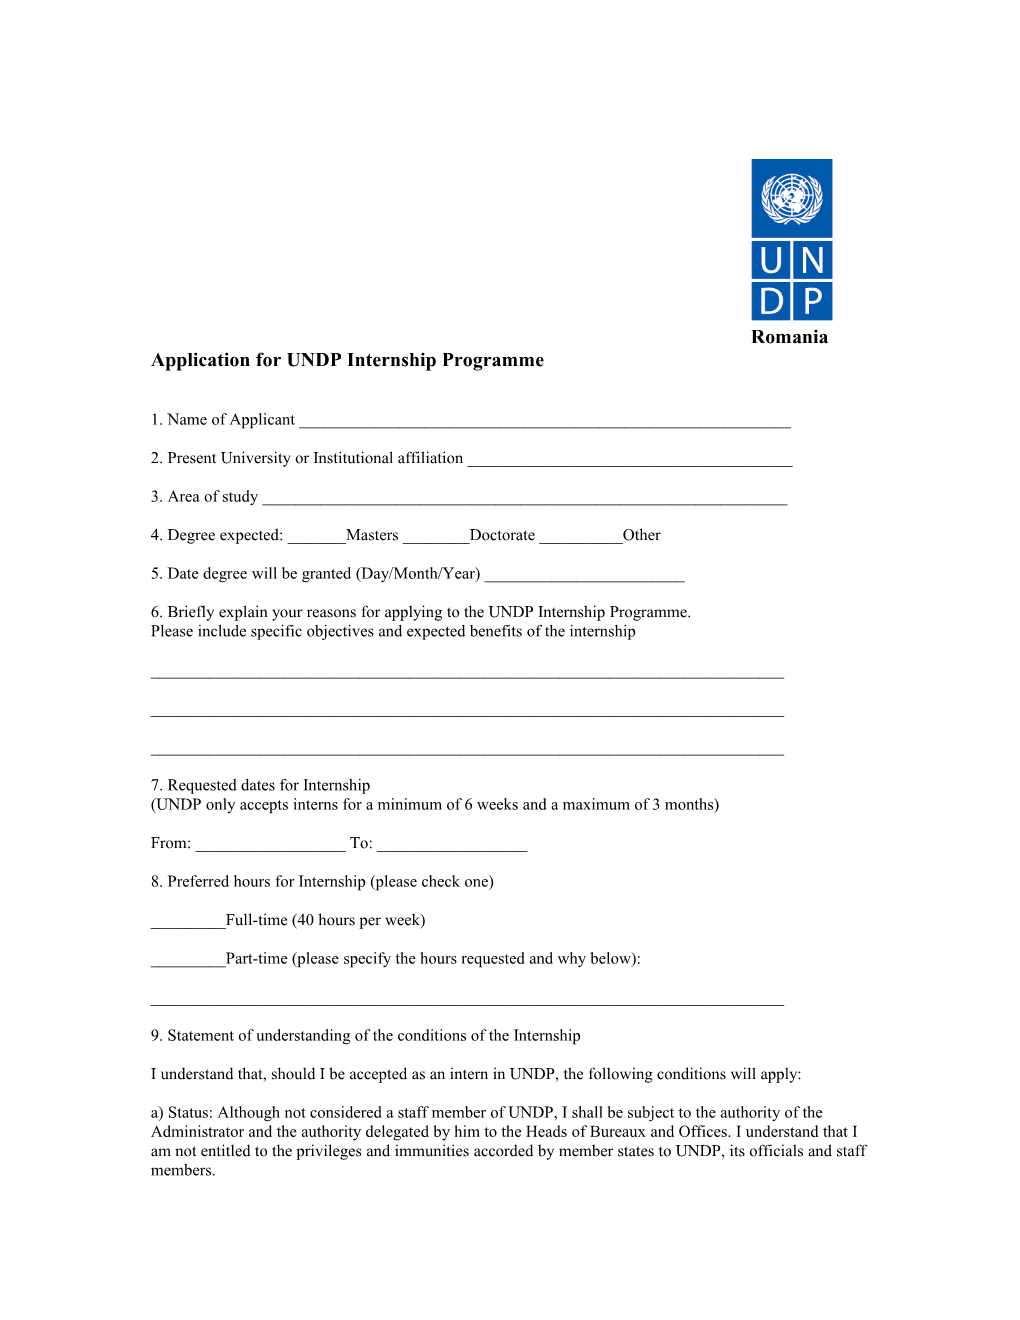 Application for UNDP Internship Programme